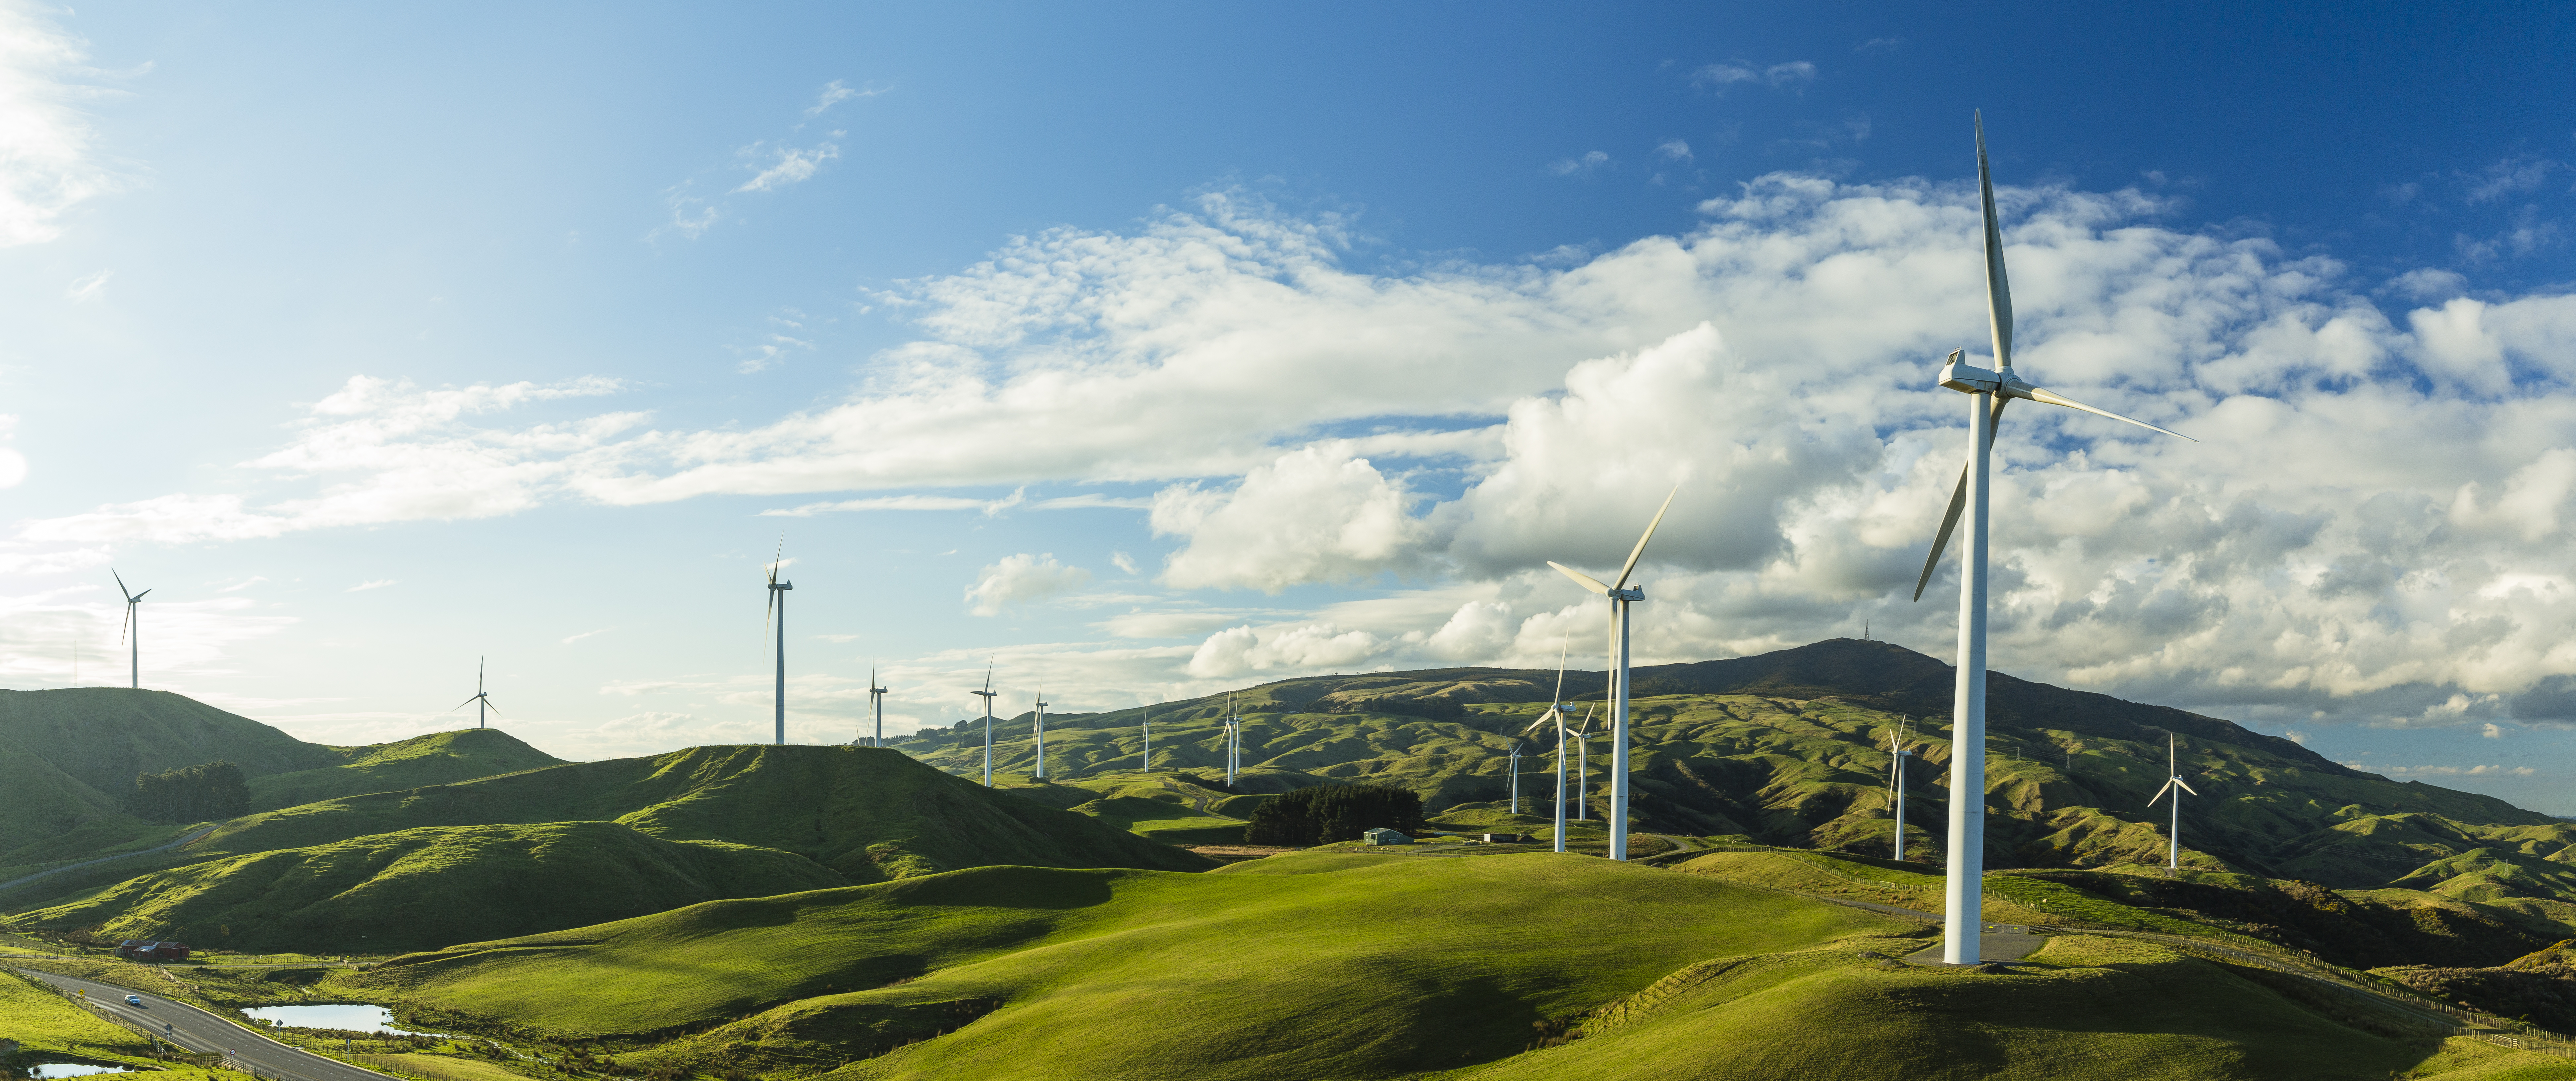 Panoramic image with wind turbines